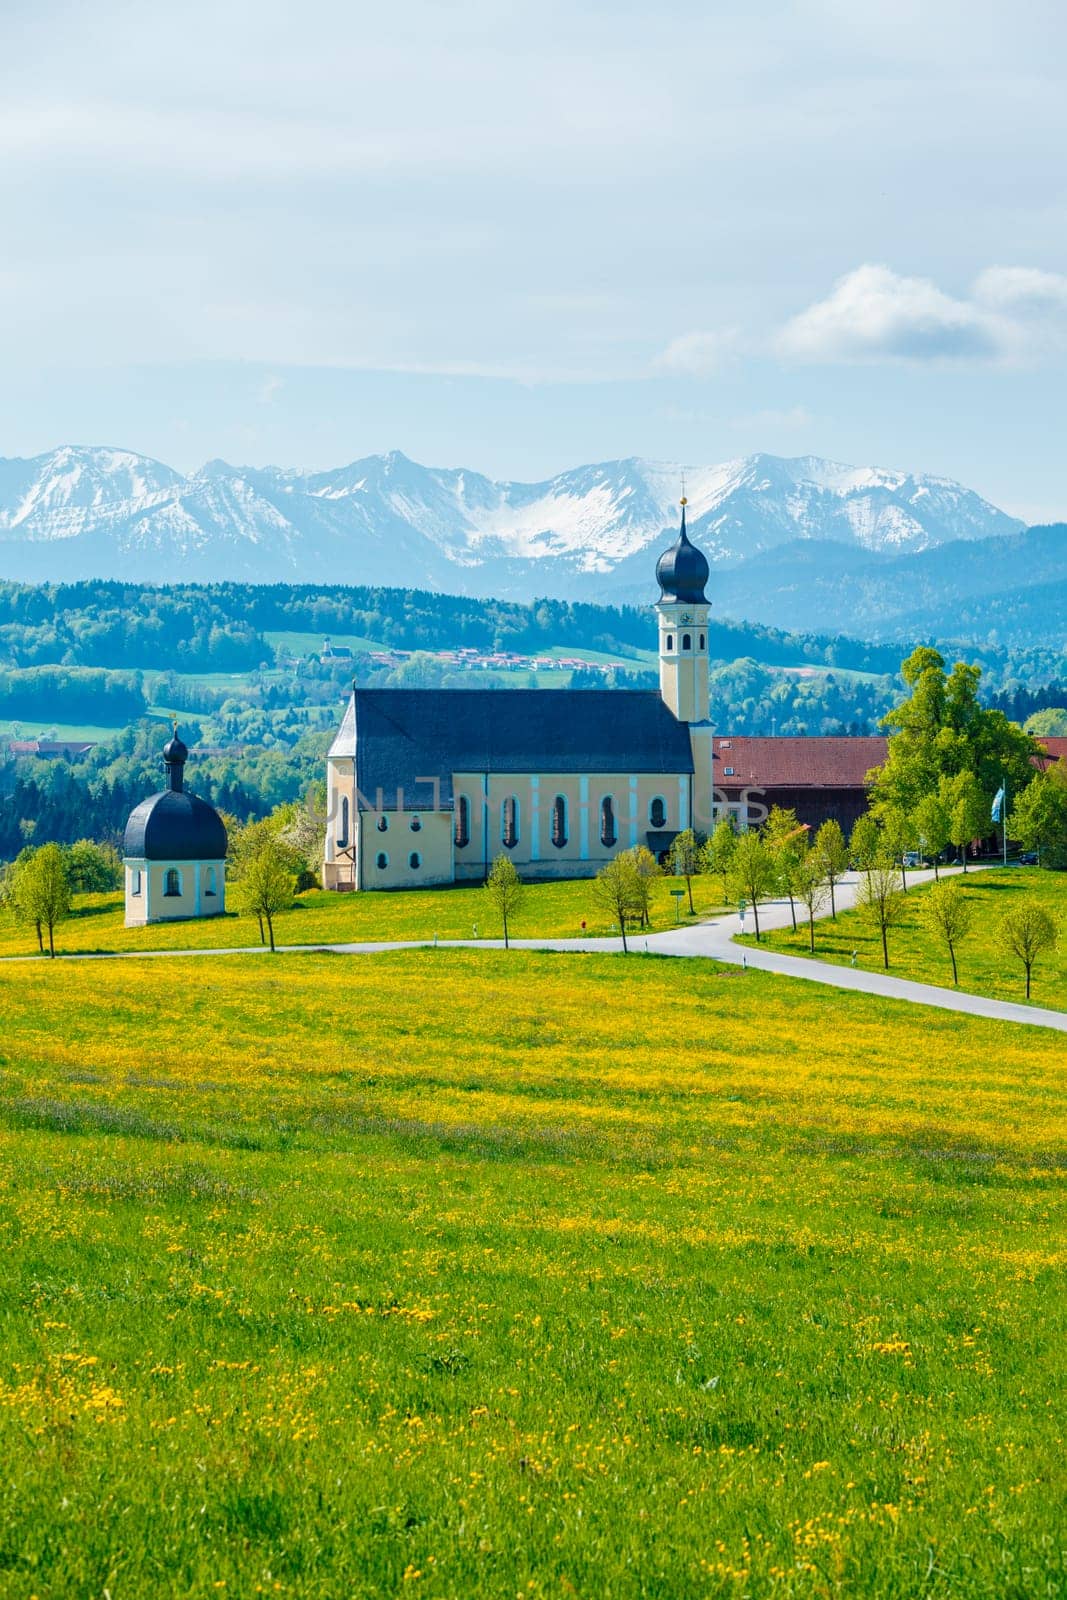 Church of Wilparting, Irschenberg, Upper Bavaria, Germany by dimol